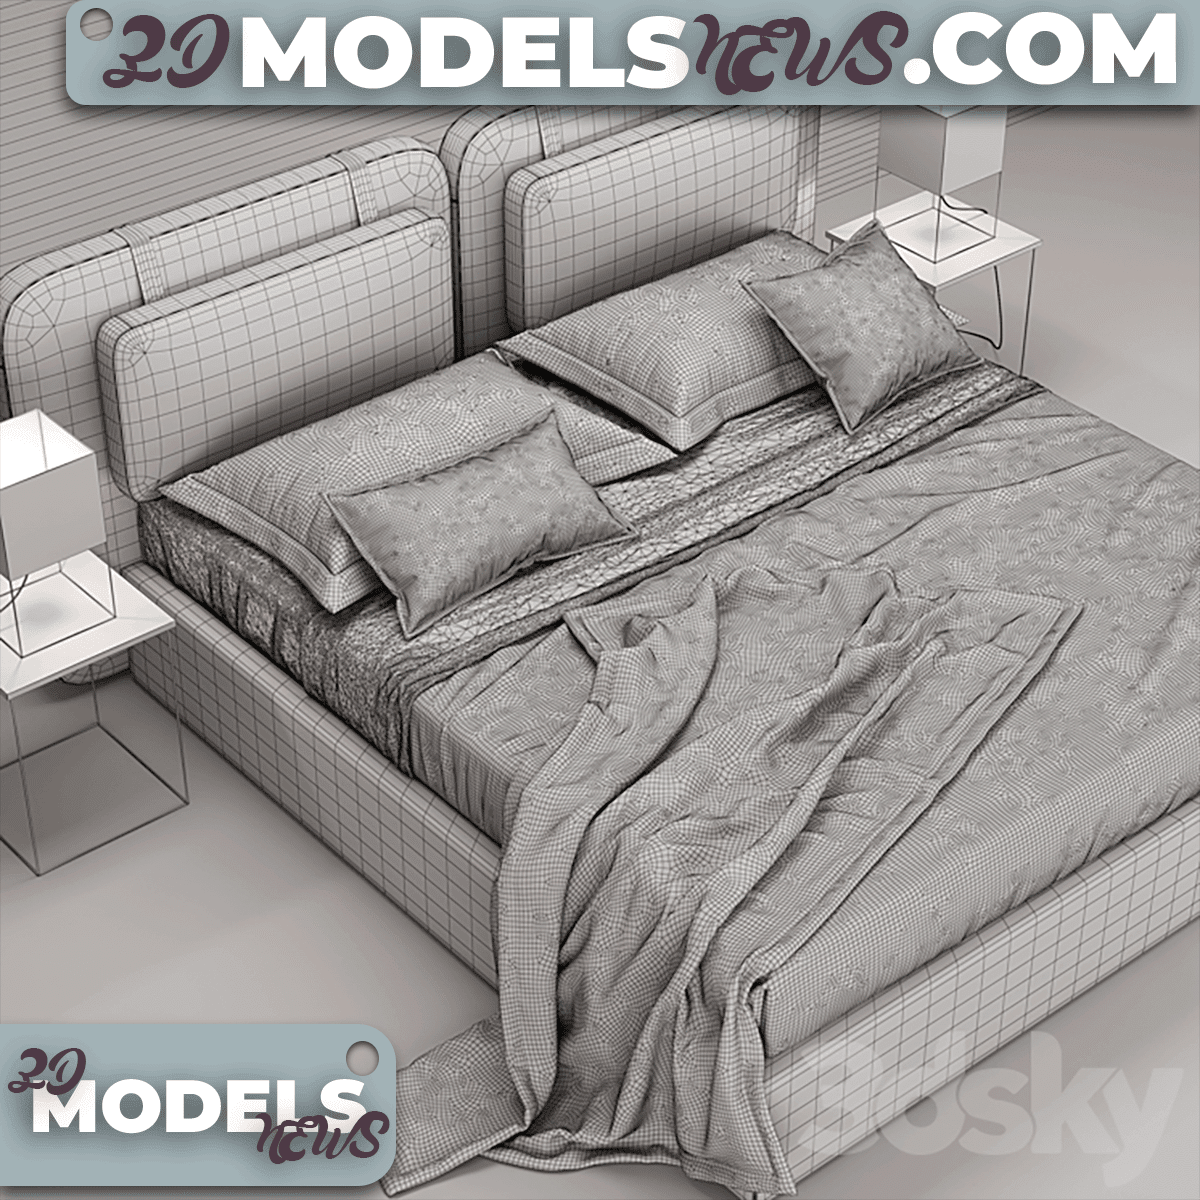 Novaluna Sound Double Bed Model 4